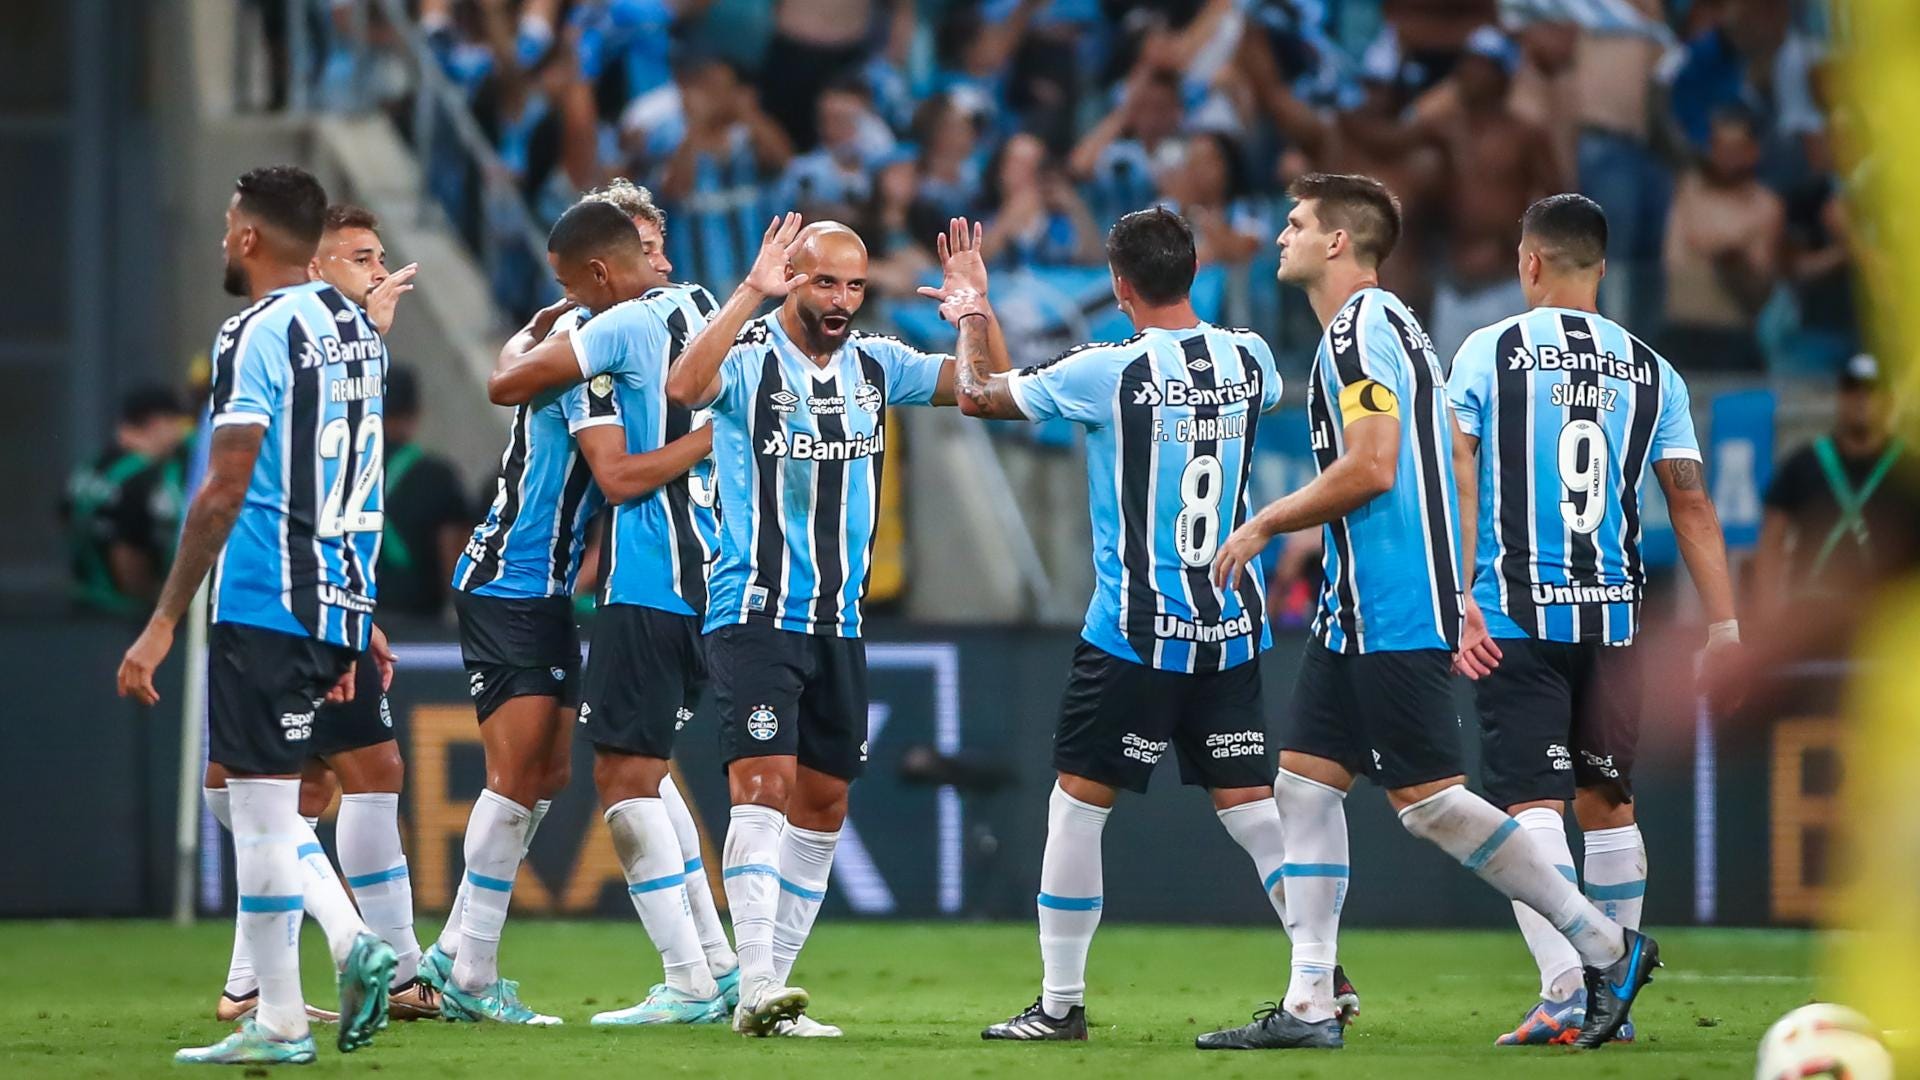 Grêmio vs Santos: A Clash of Titans